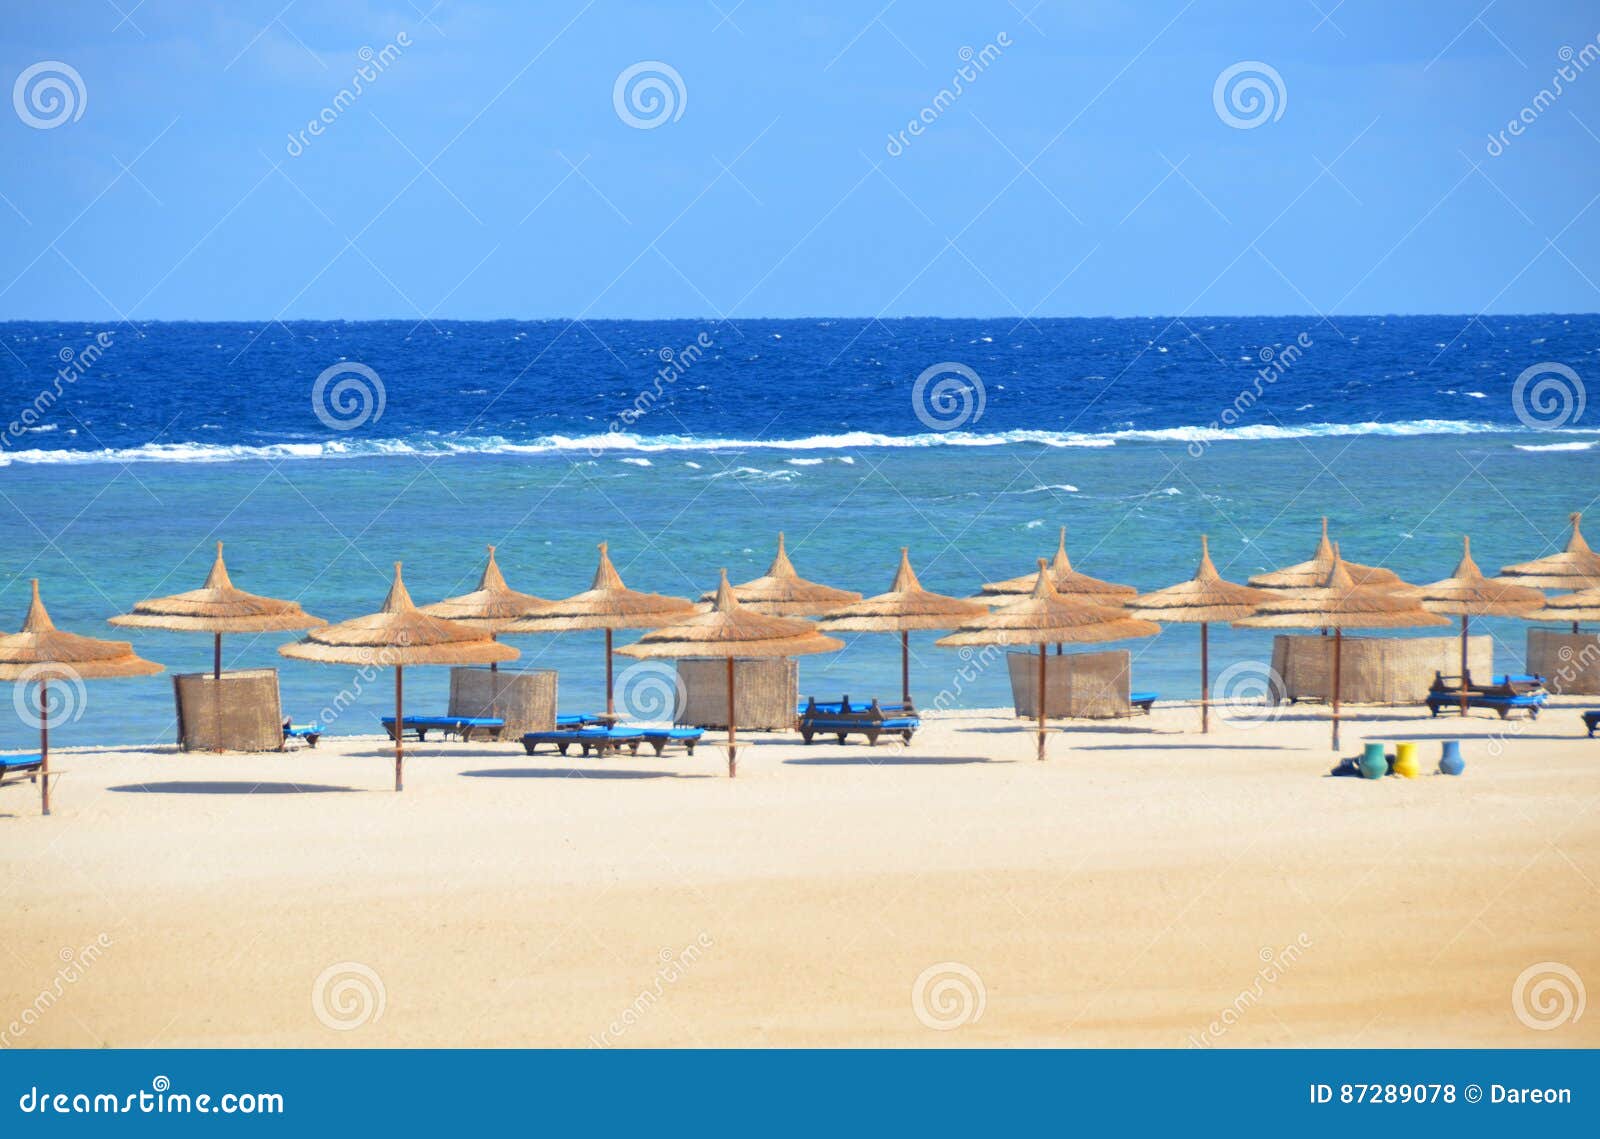 sandy beach at hotel in marsa alam - egypt